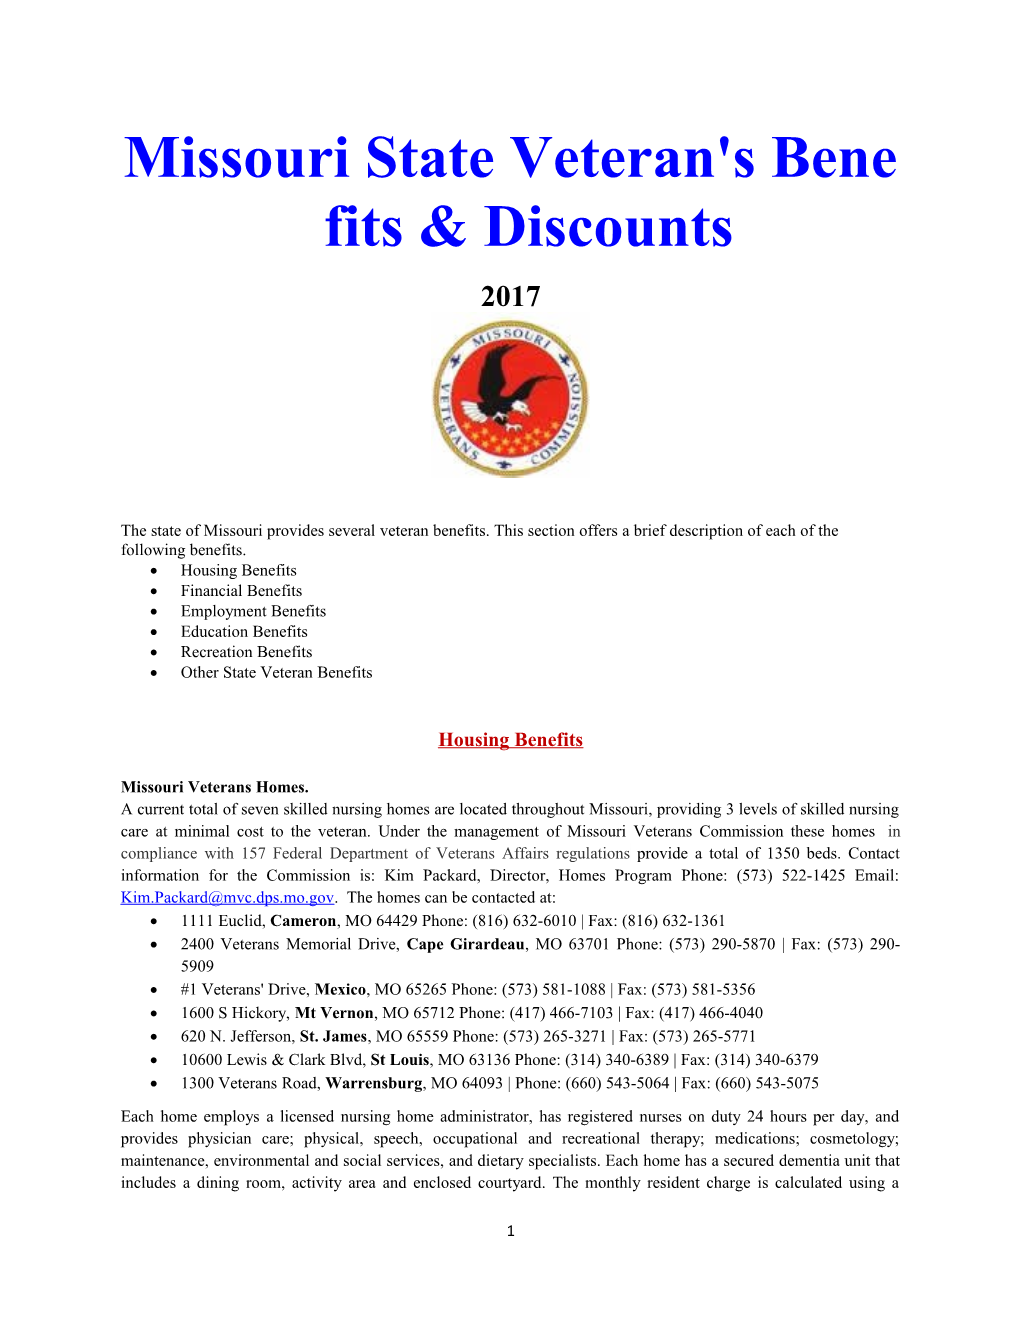 Missouri State Veteran's Benefits & Discounts